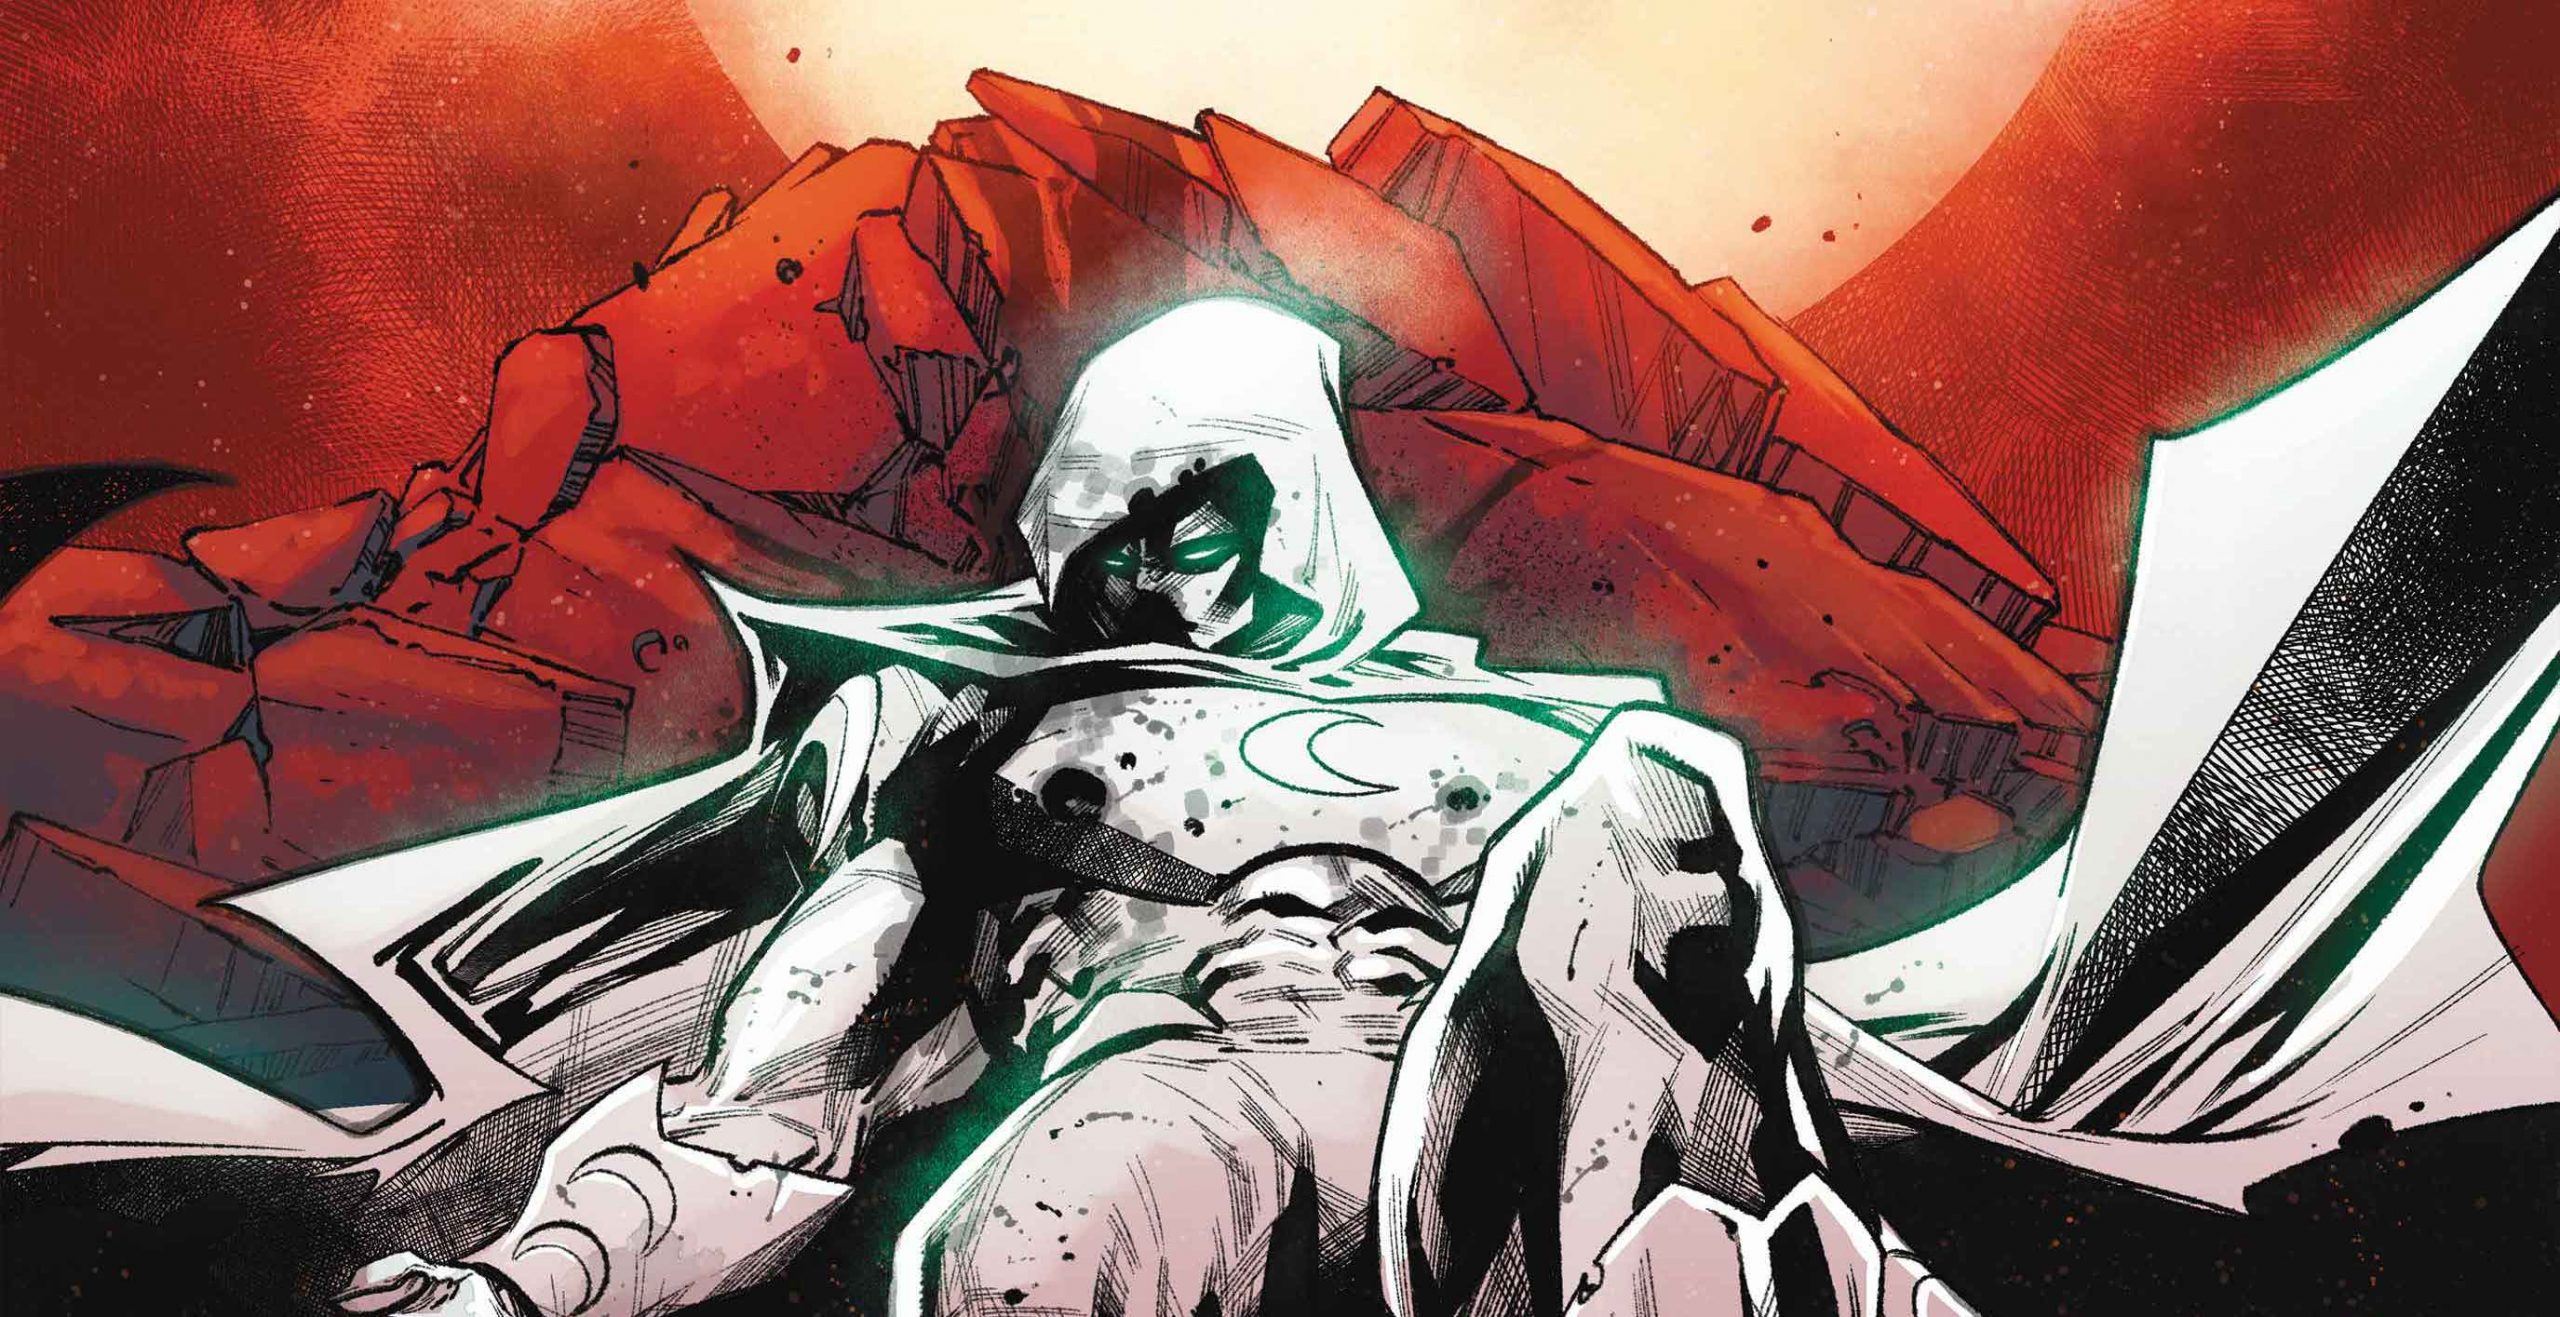 Marvel reveals Moon Knight dies in 'Moon Knight' #30 • AIPT